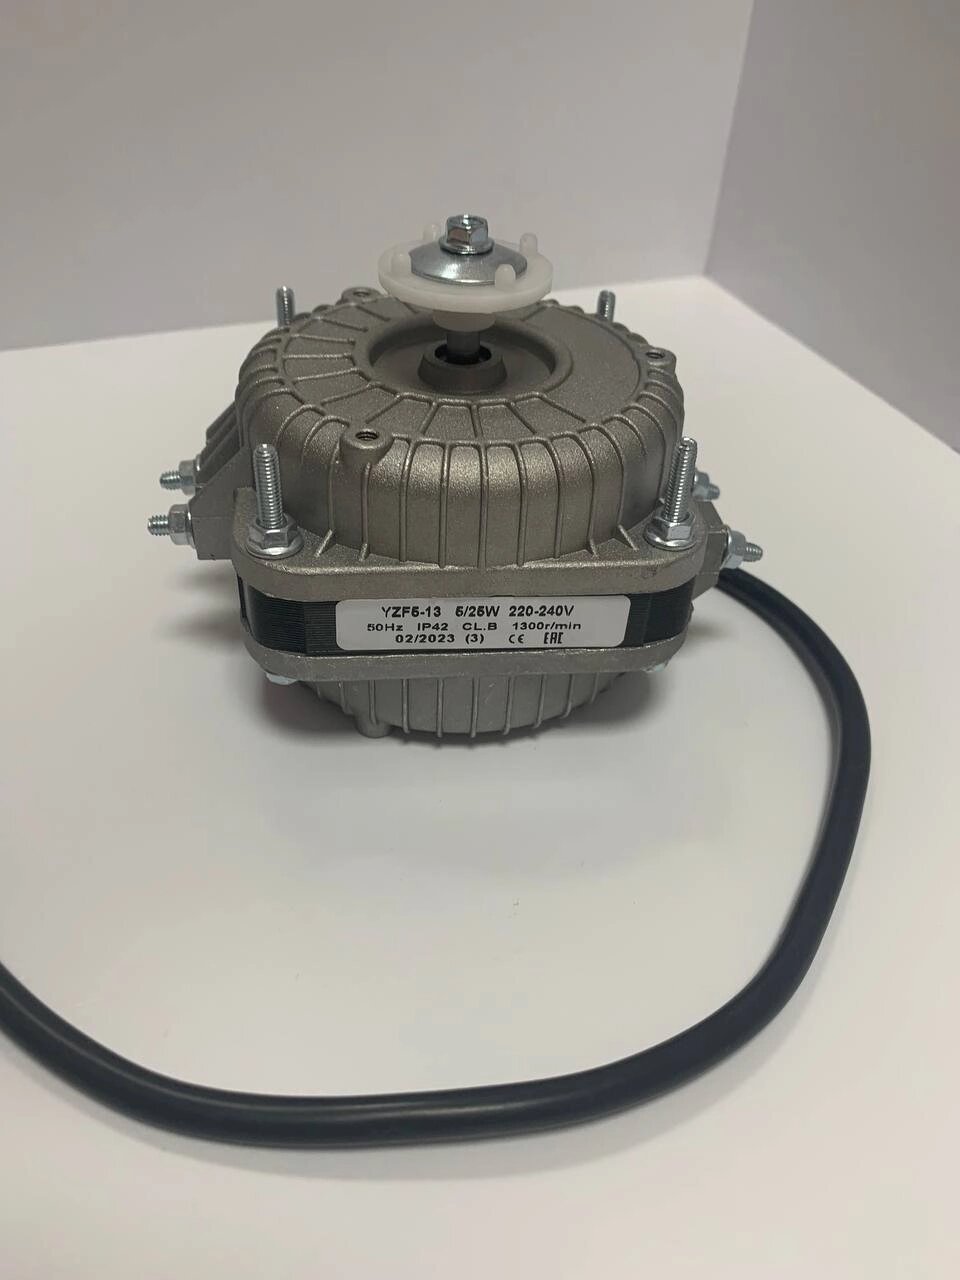 Микродвигатель YZF 5-13, 5/25W, 1300 r/min. от компании Запчасти для бытовой техники - фото 1